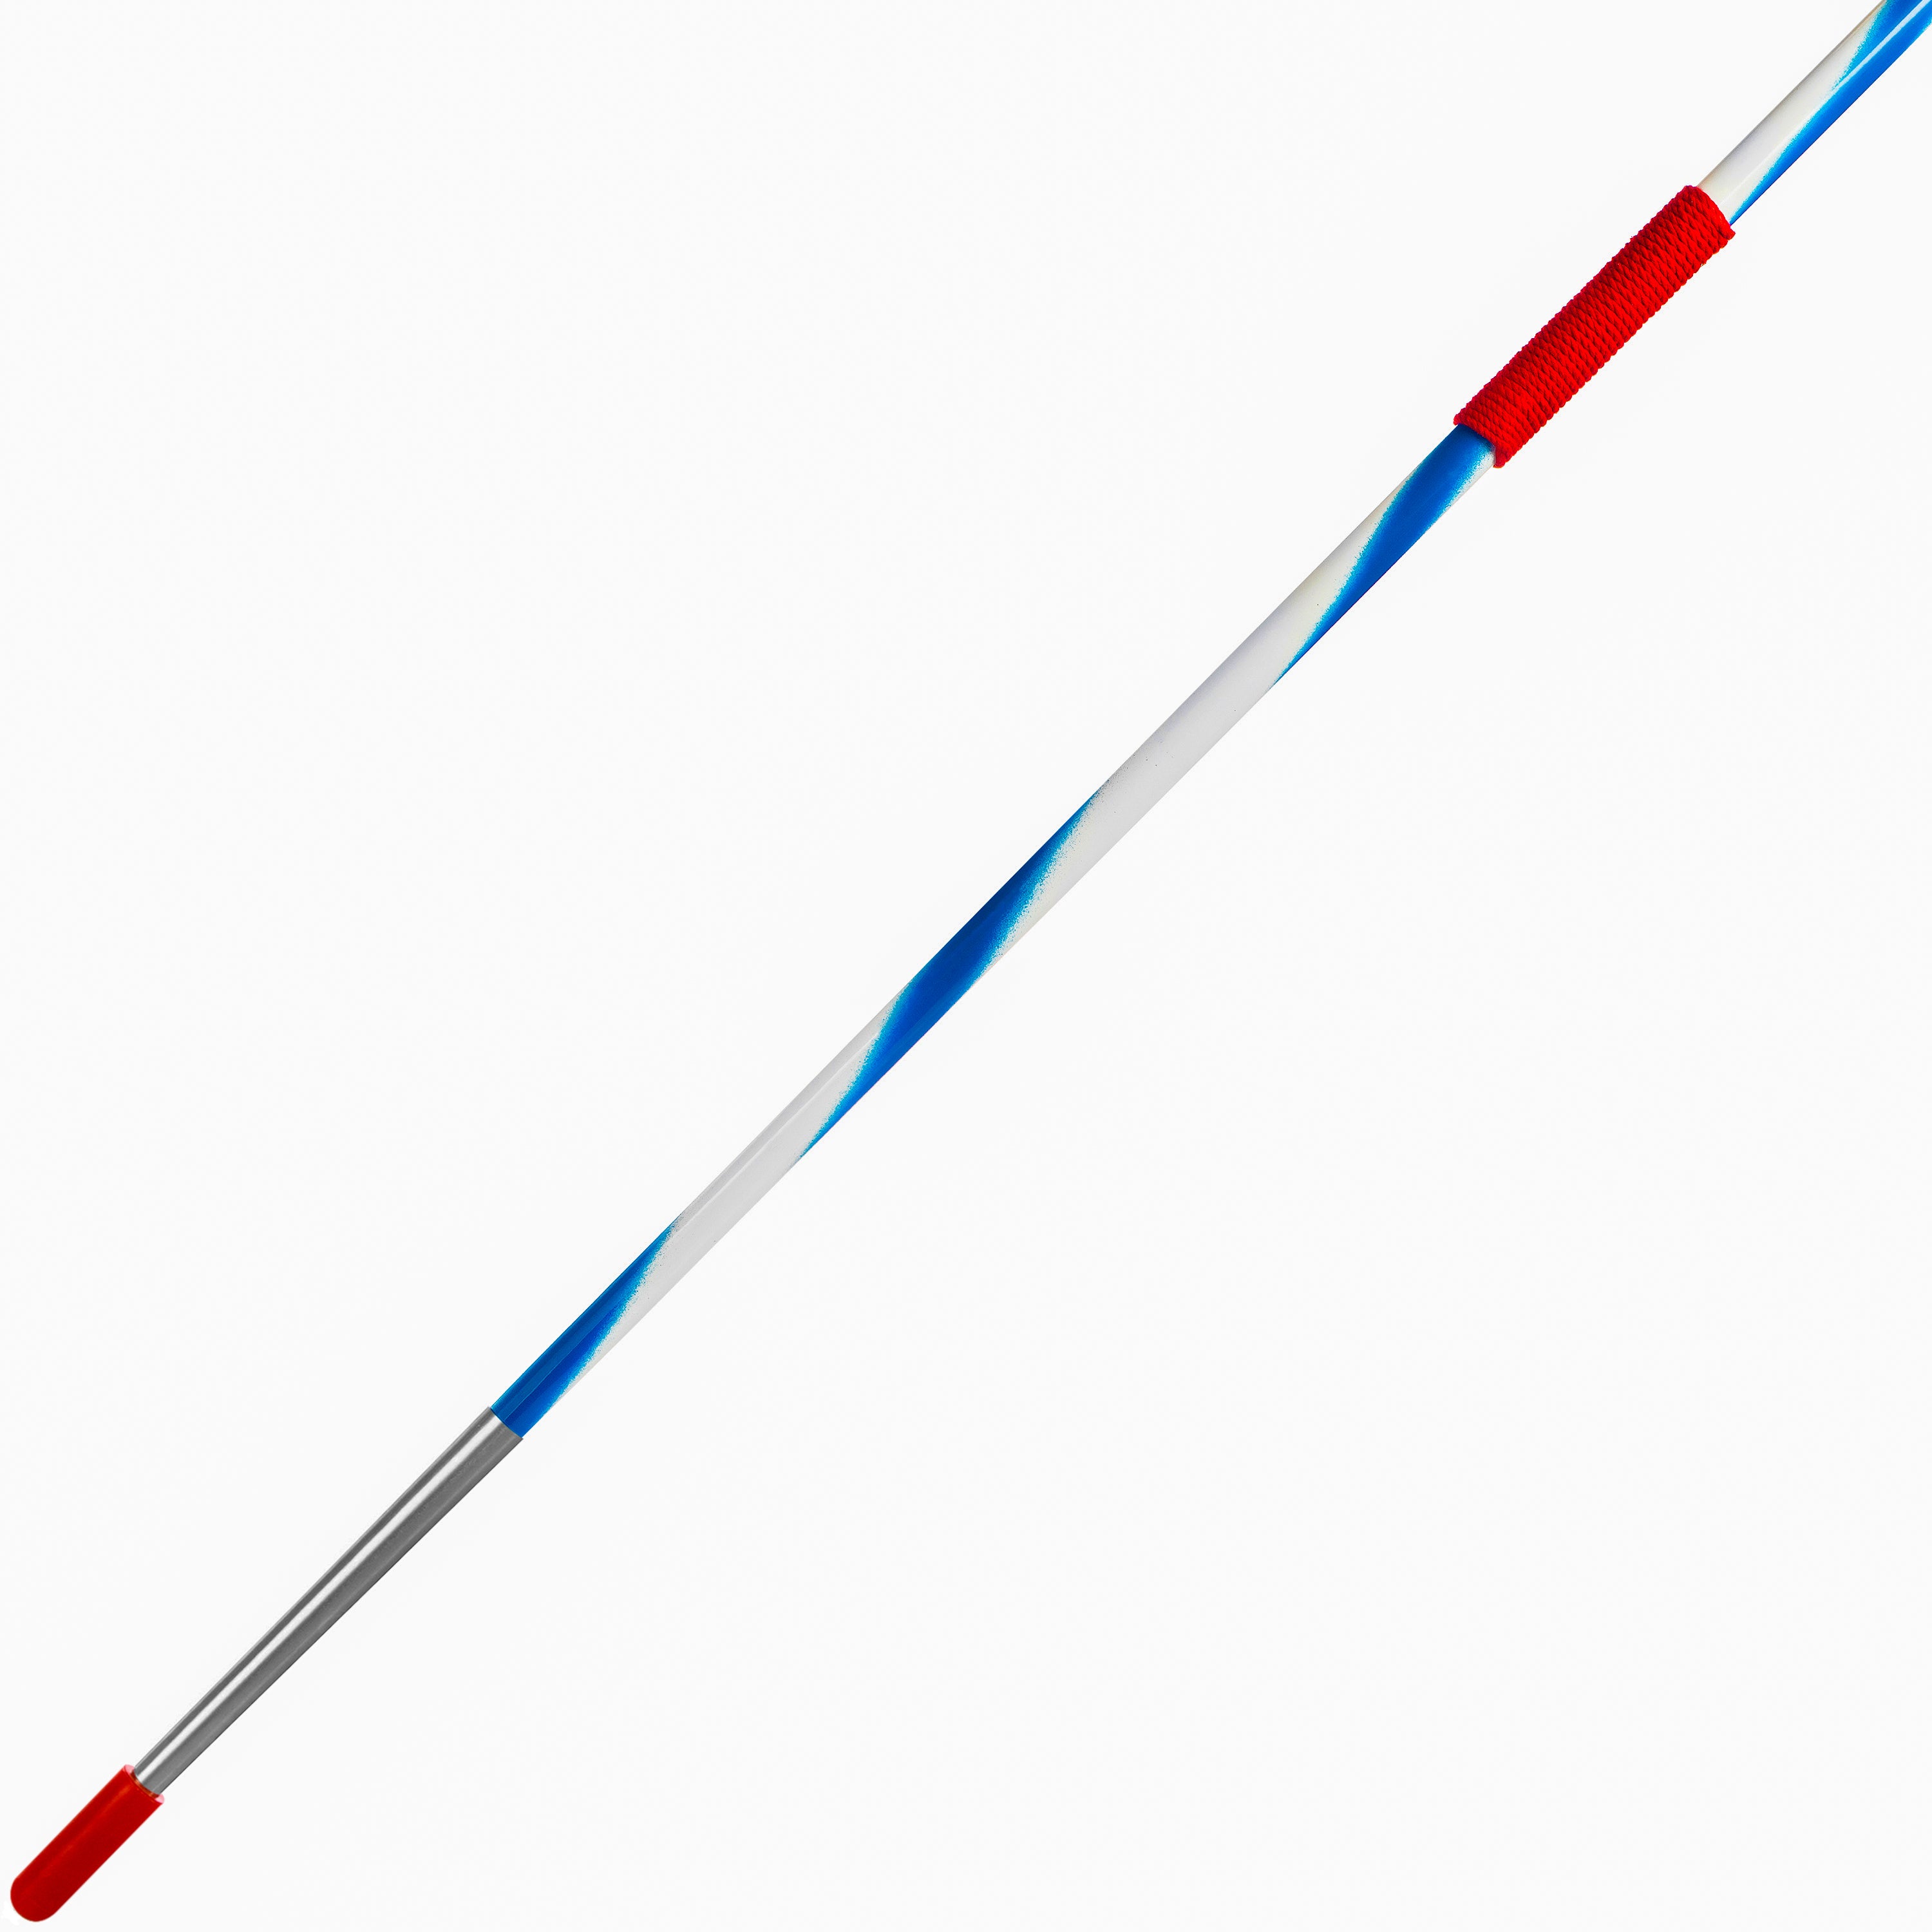 4Throws 800 Gram Training Javelin - Rubber Tip